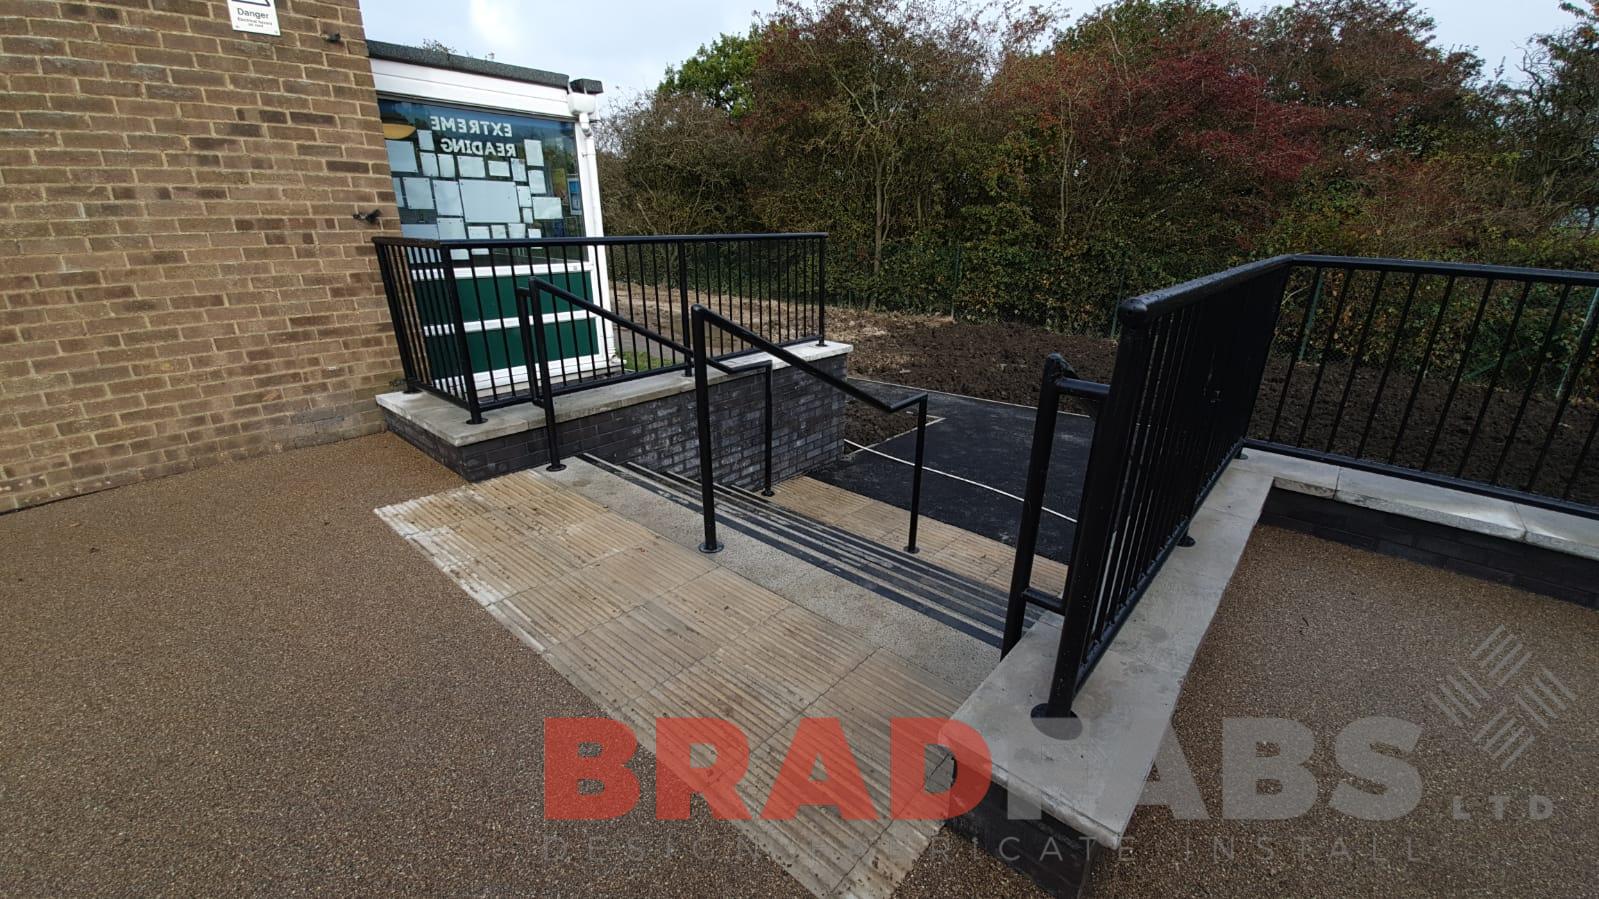 Bespoke railings for a school, manufactured in mild steel, galvanised and powder coated black by Bradfabs Ltd